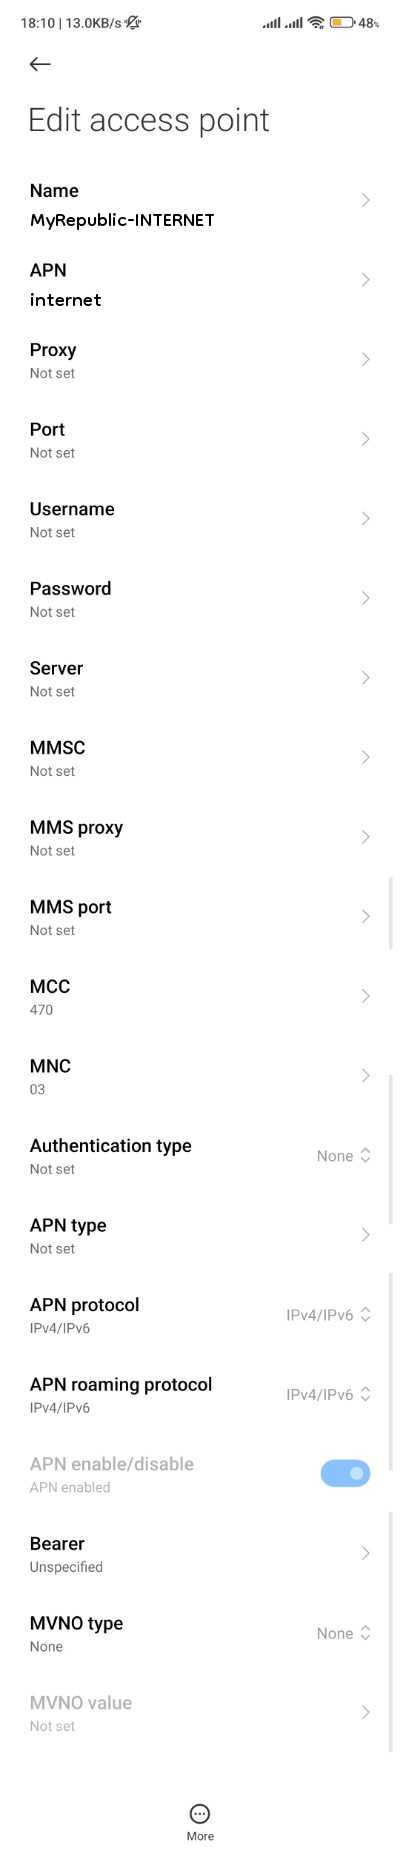 MyRepublic APN Setiings for Android iPhone 3G 4G Internet